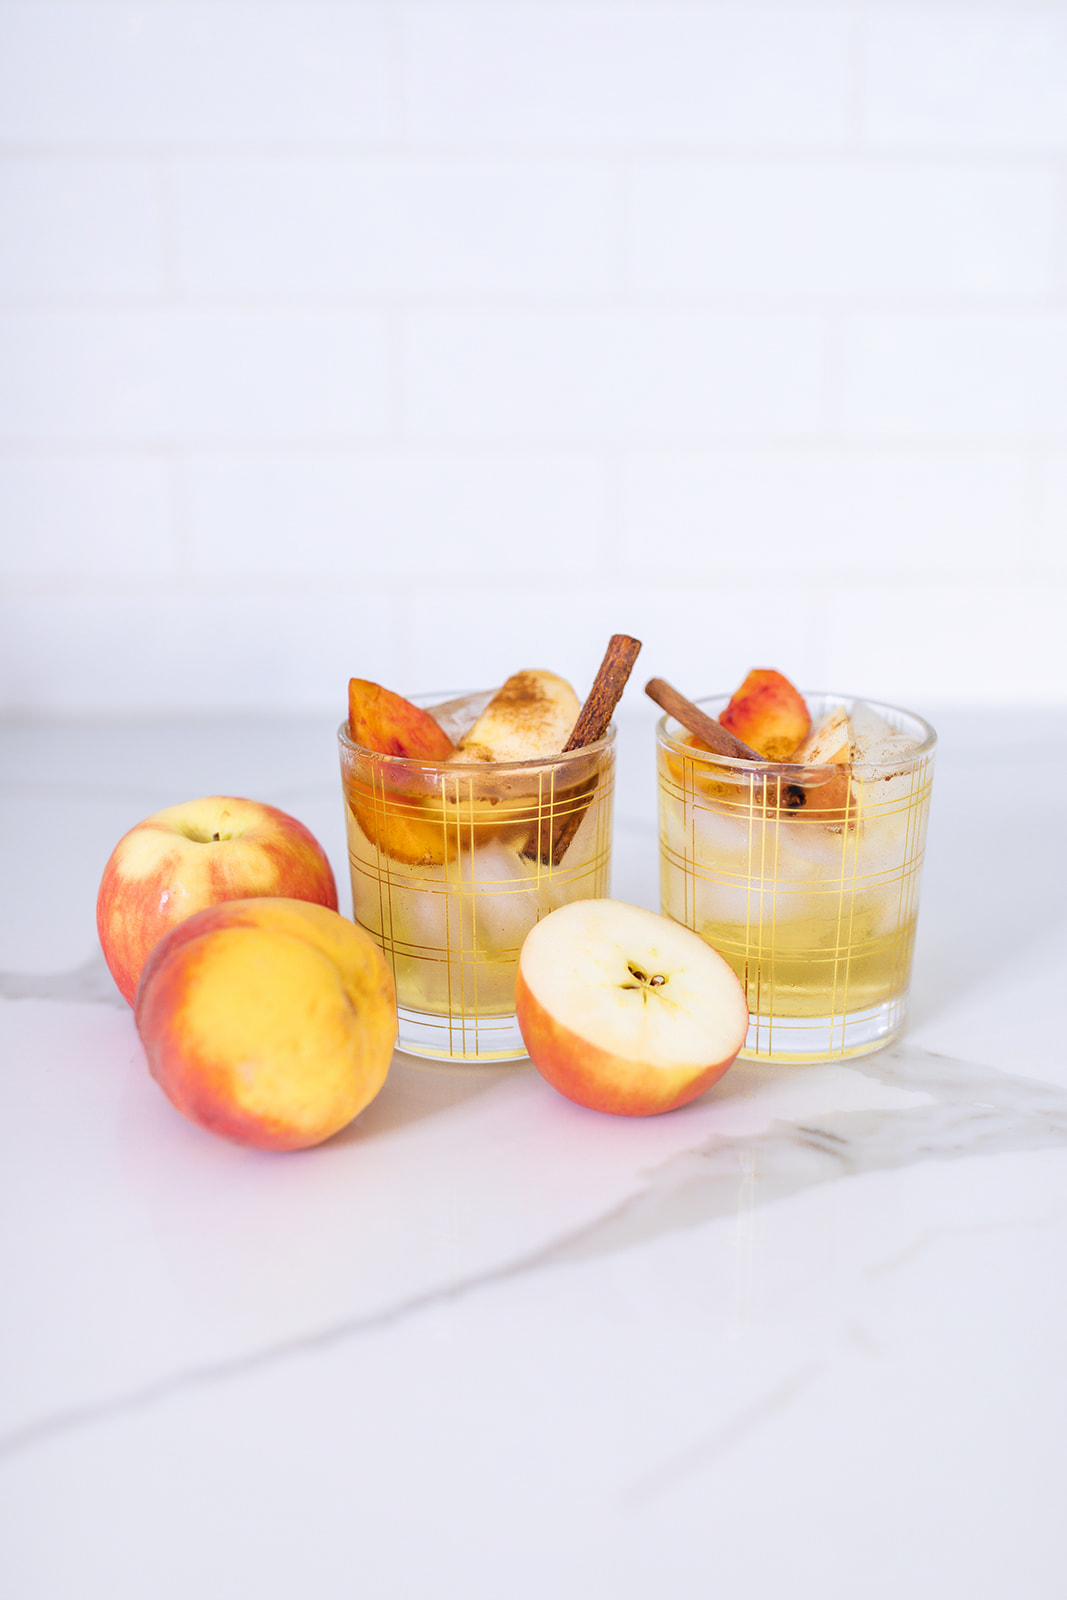 Iced Apple Peach Cider